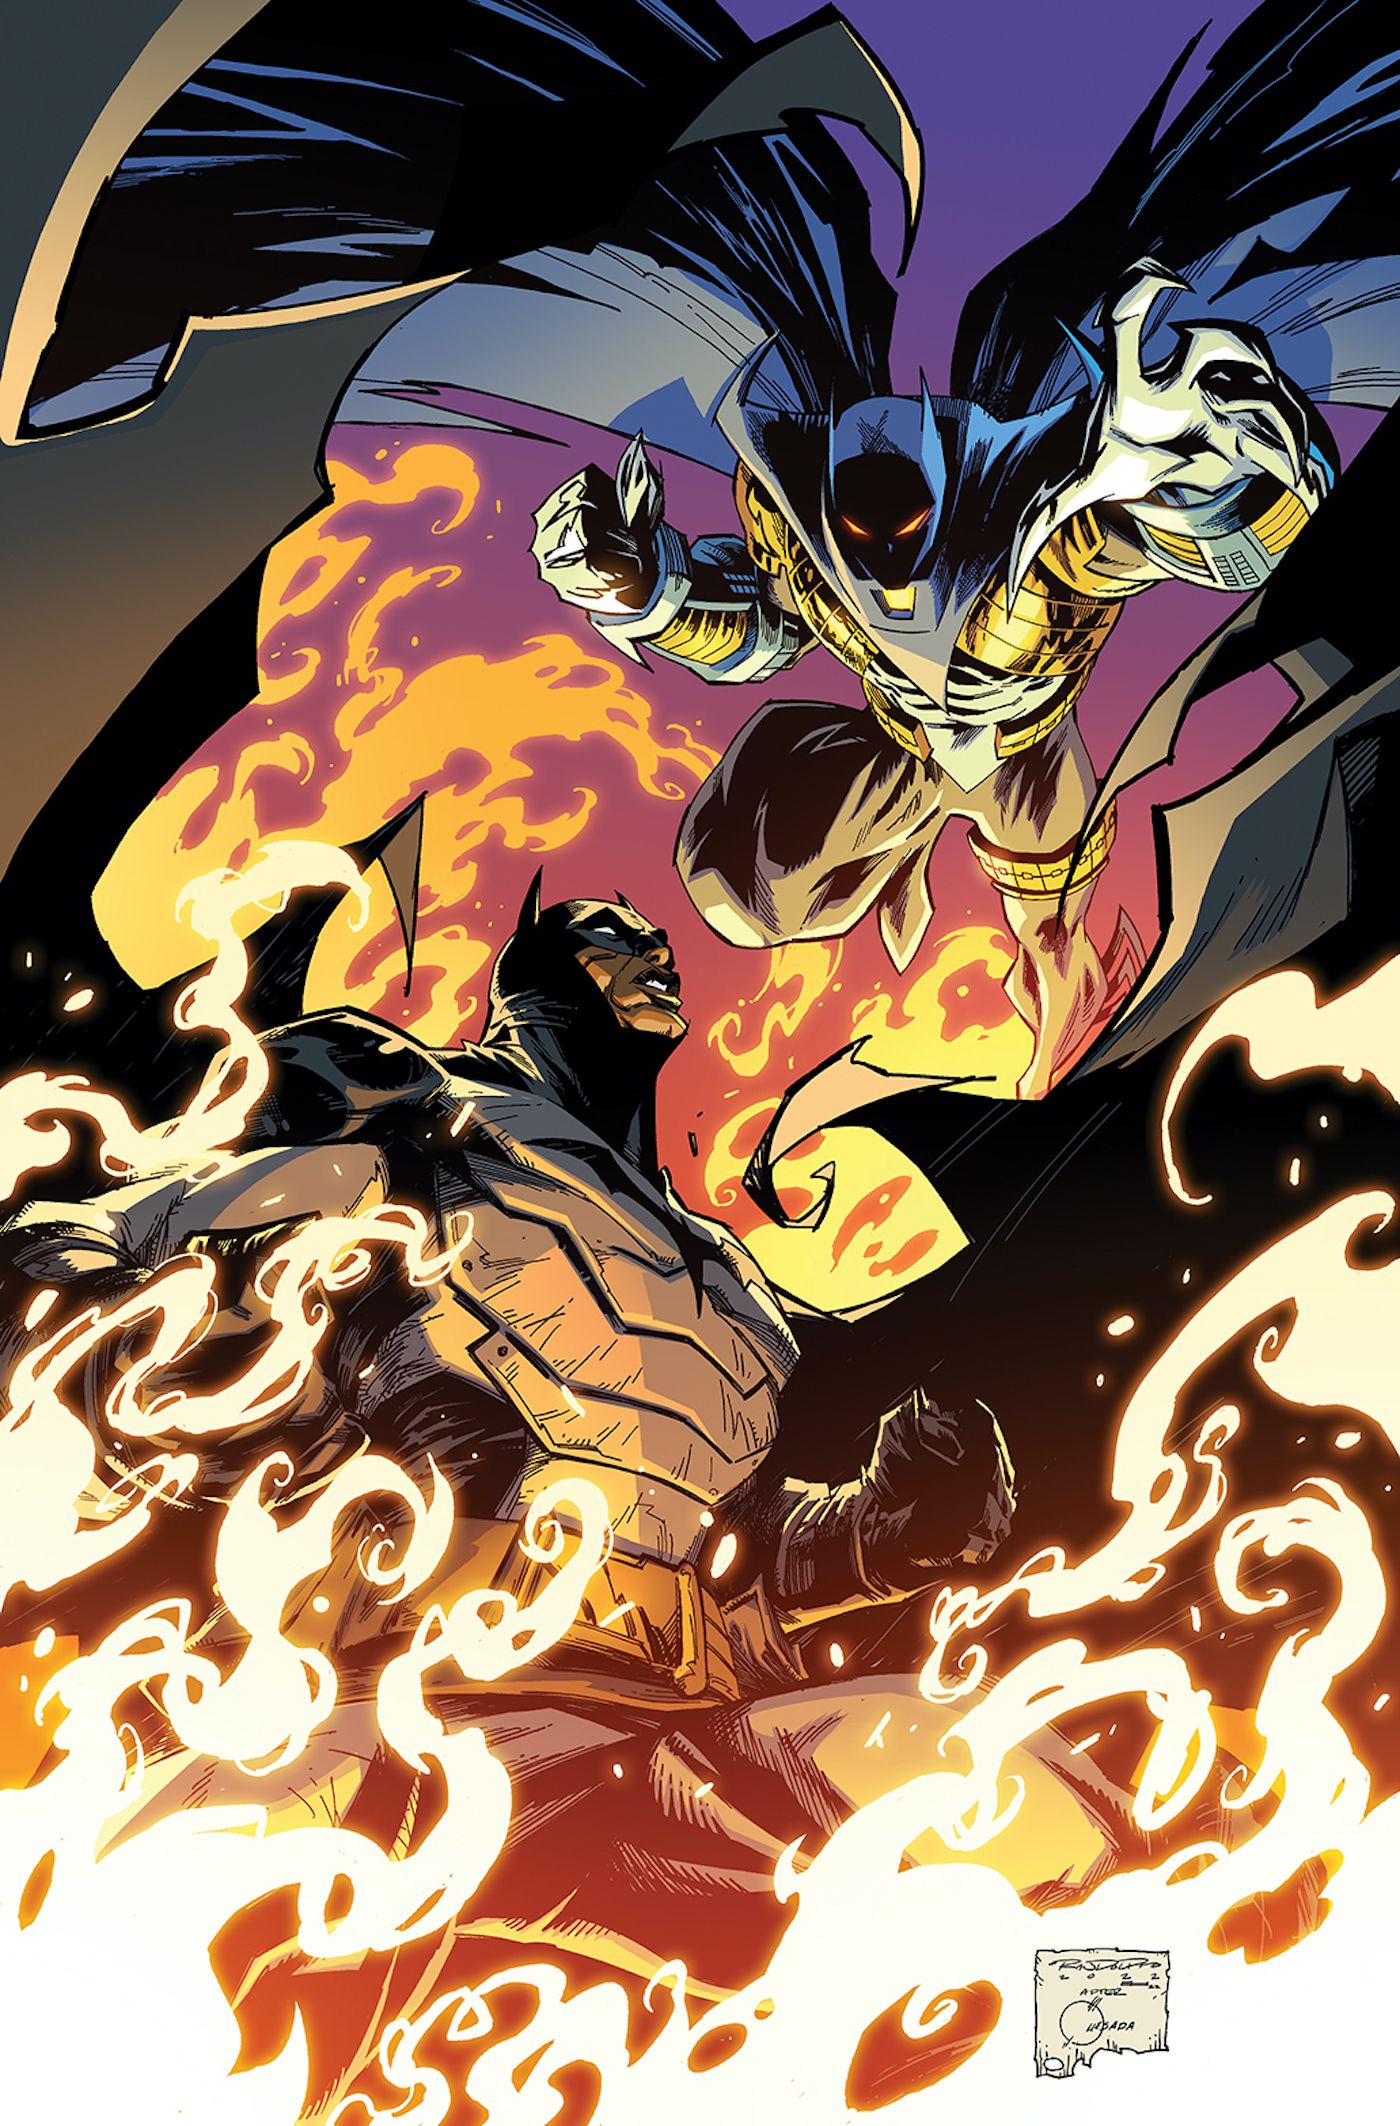 Batman vs Azrael Returns in Epic Throwback Cover Art